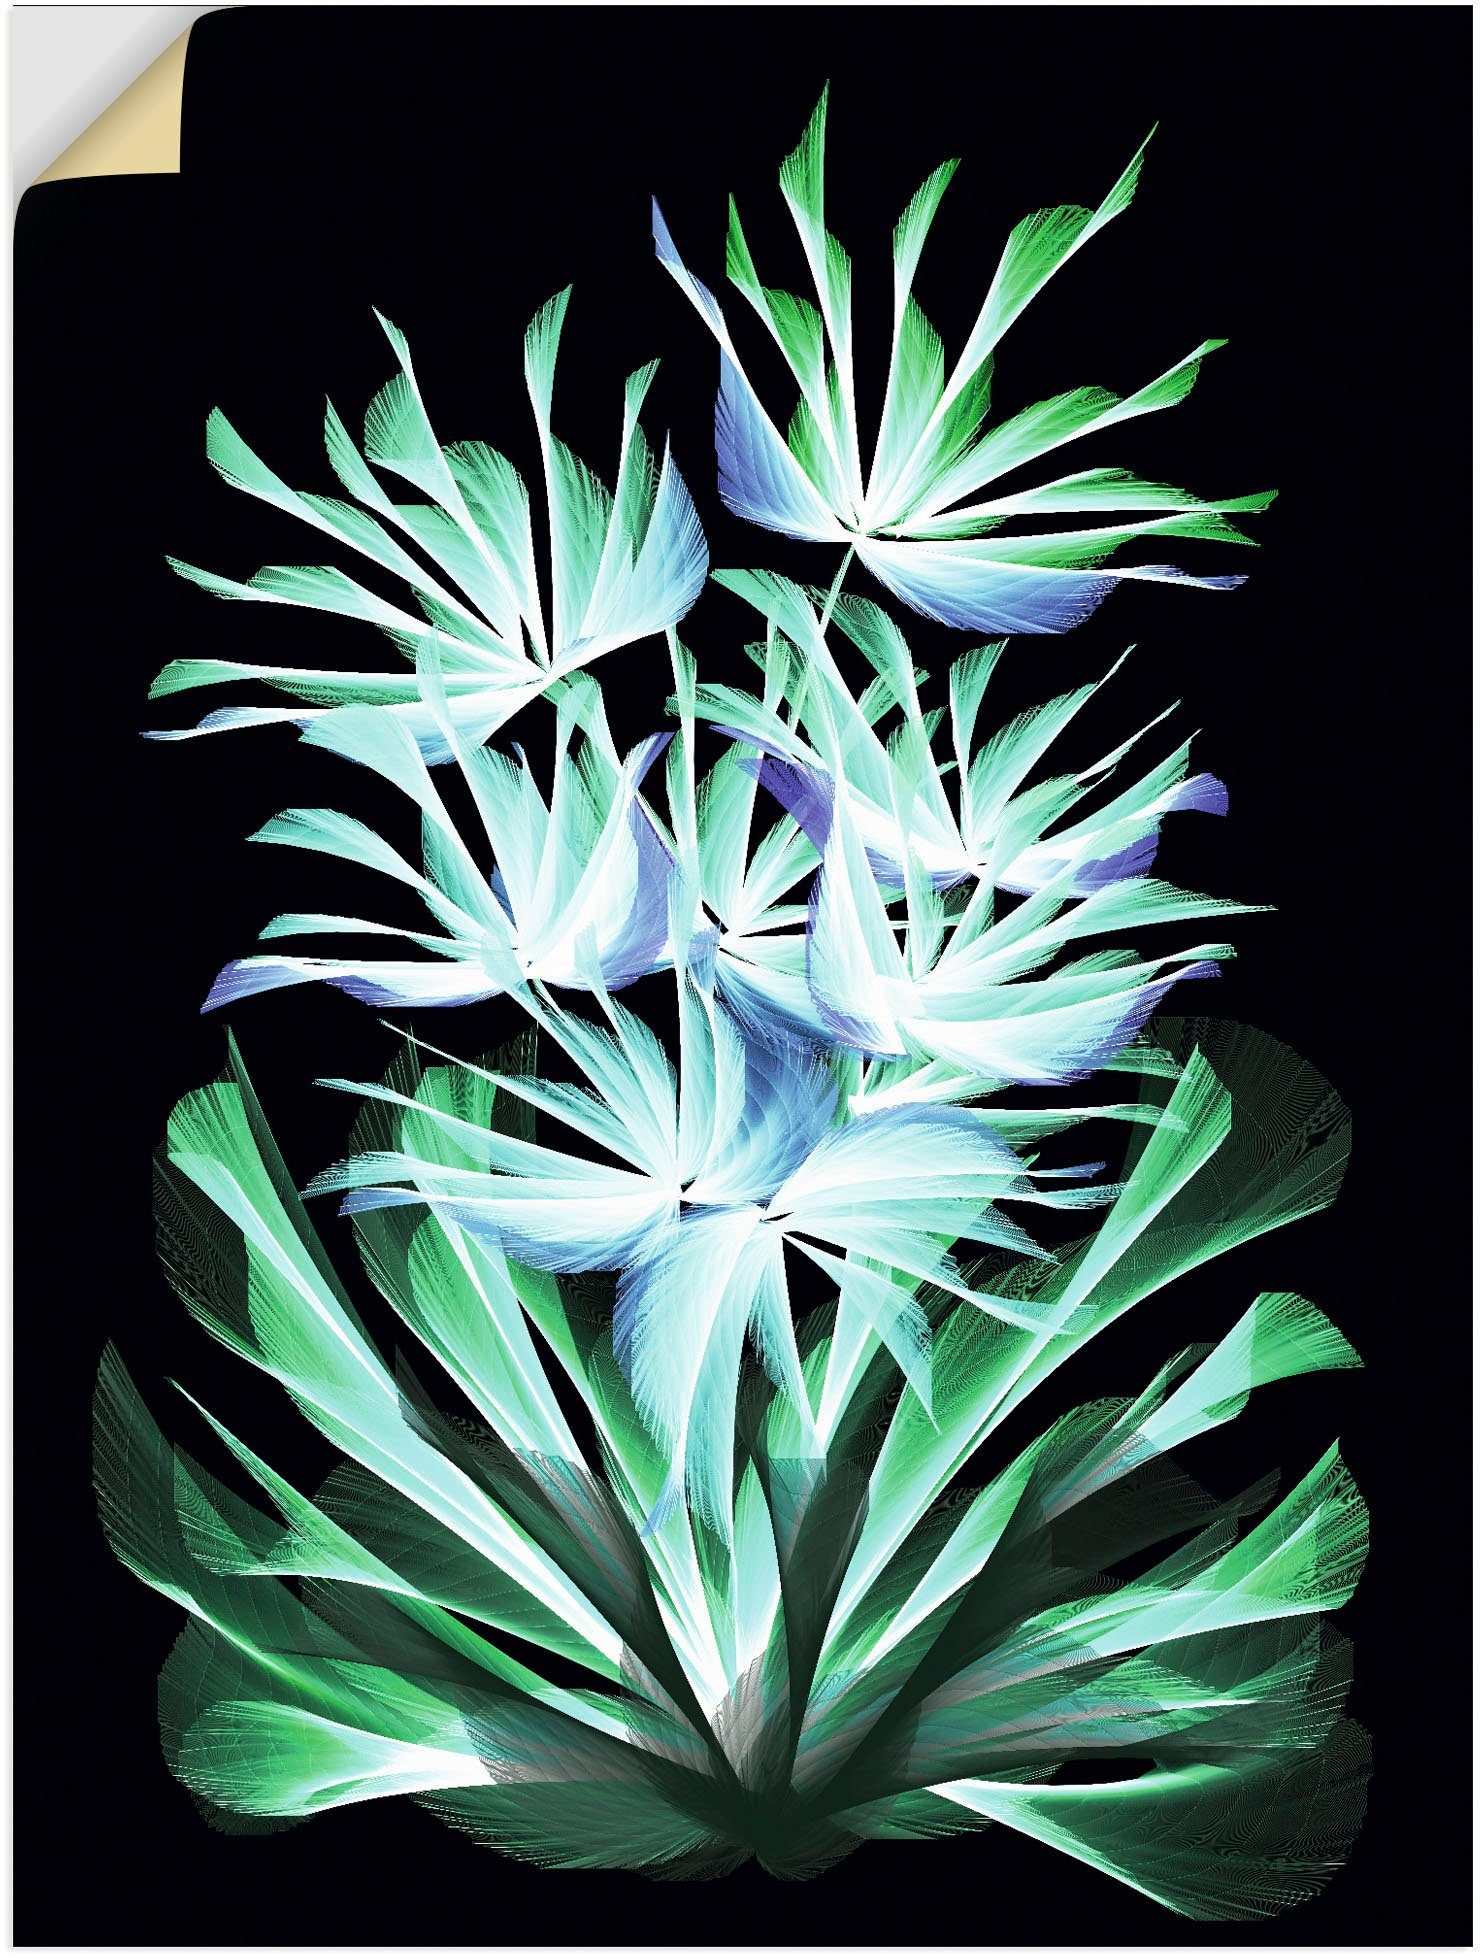 Artland Artprint Leuchtende Nachtblumen in vele afmetingen & productsoorten - artprint van aluminium / artprint voor buiten, artprint op linnen, poster, muursticker / wandfolie ook